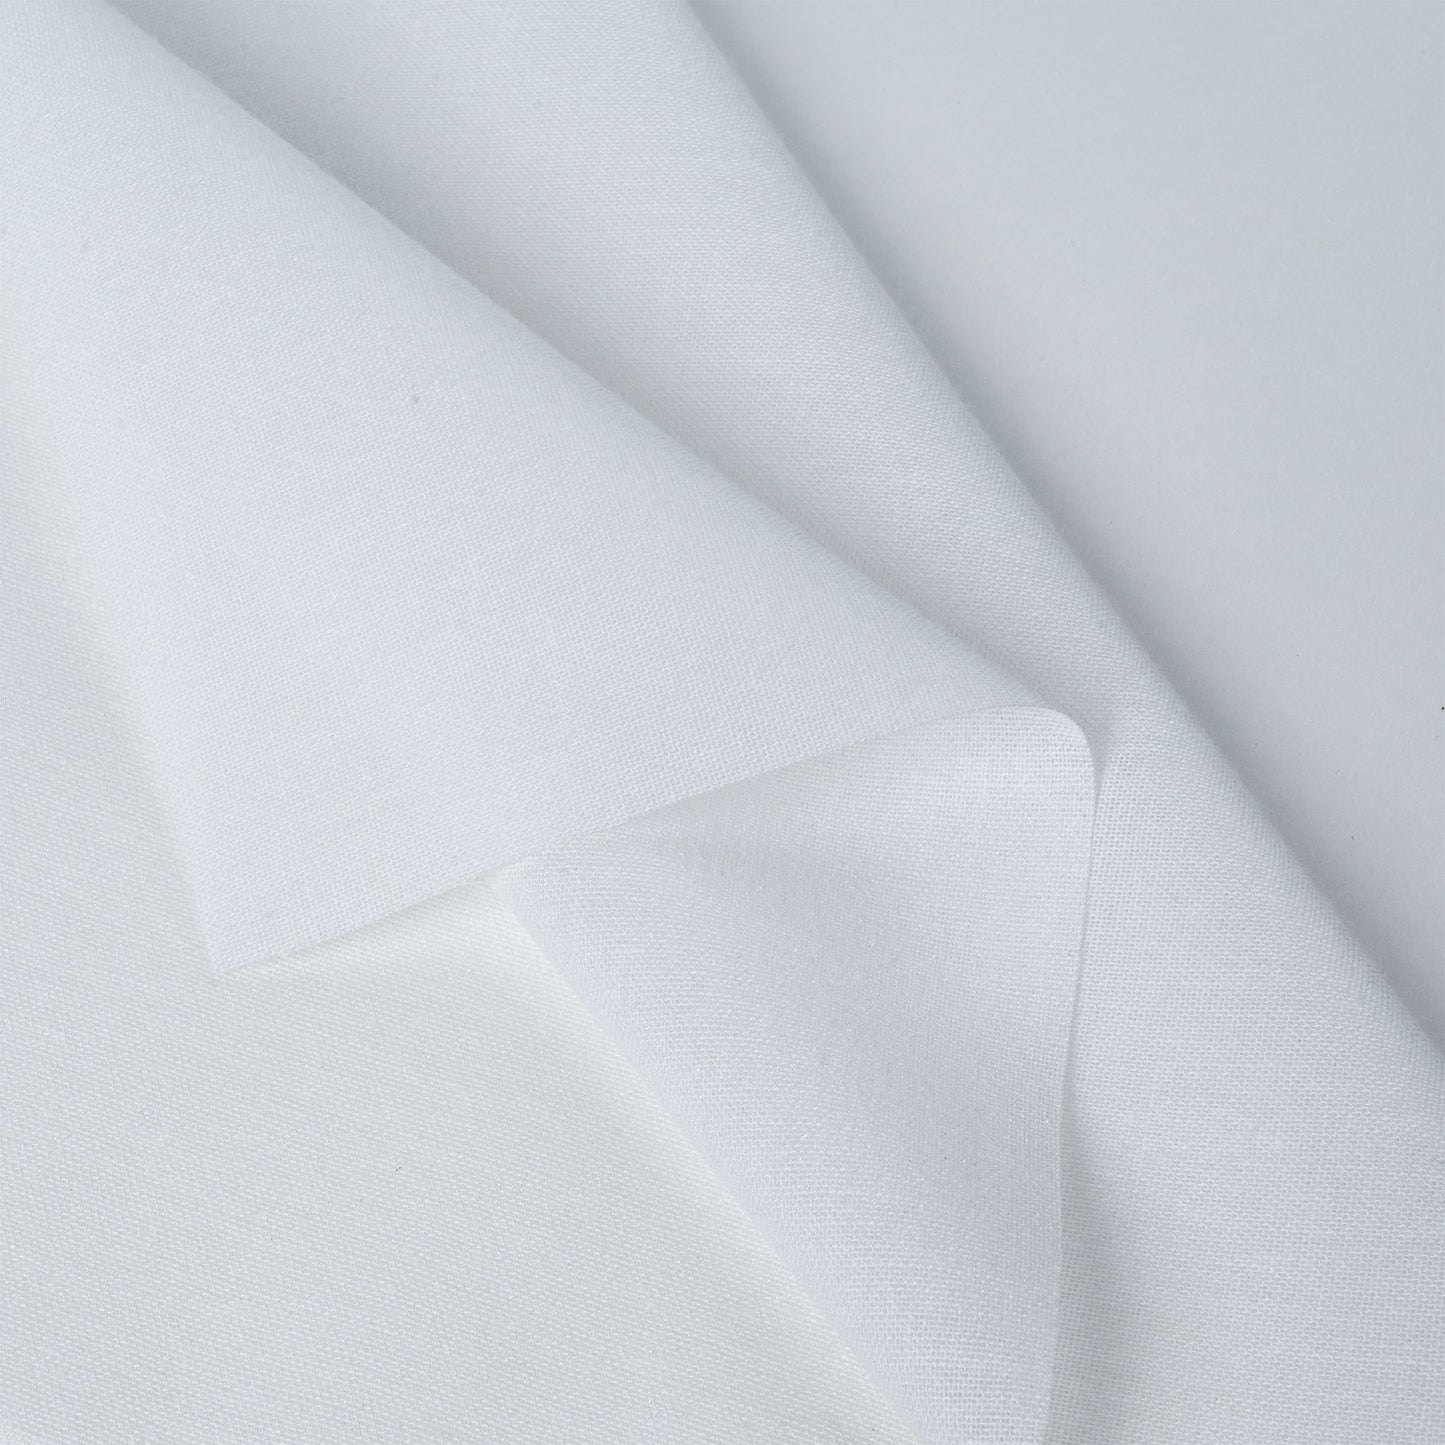 Woven Fusible Interfacing White 100% Cotton